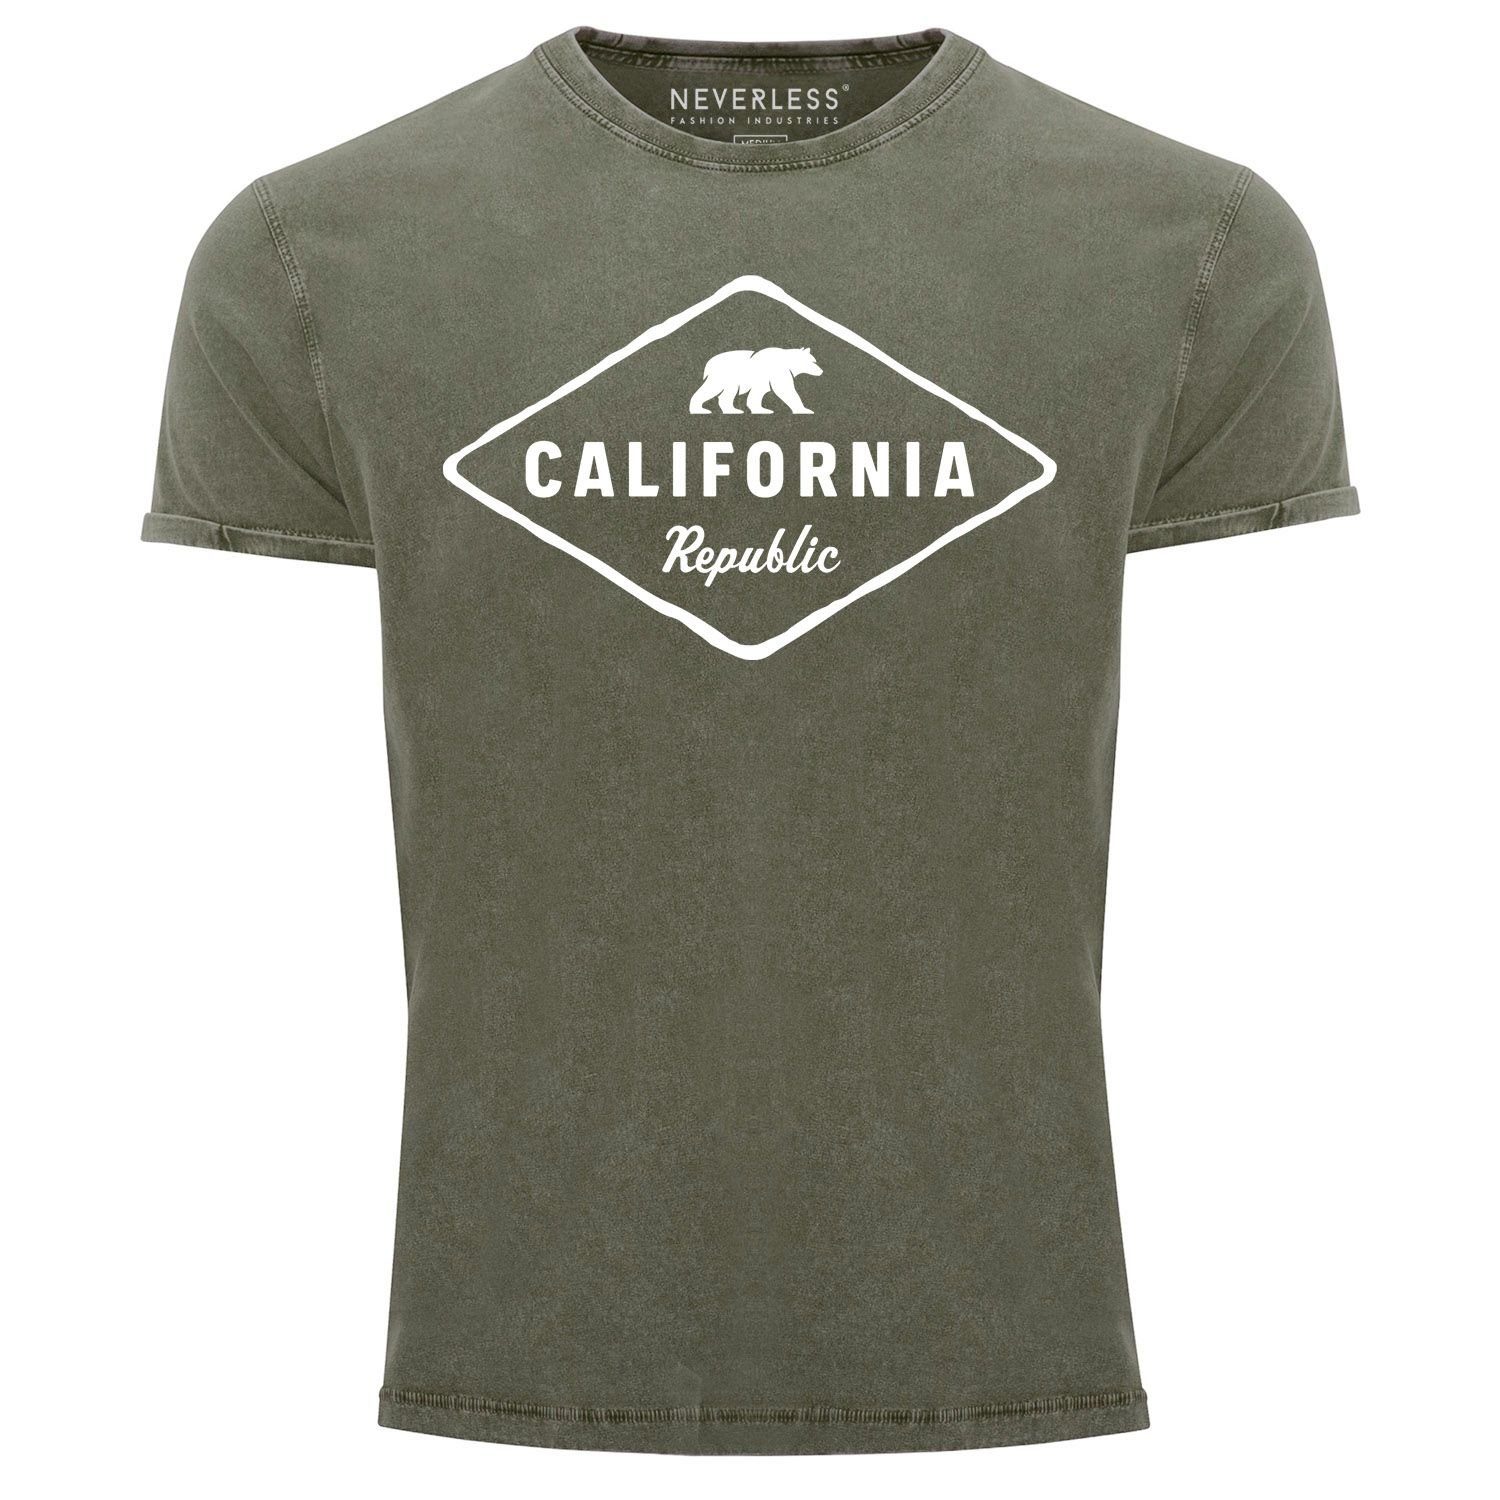 Printshirt Herren State mit Aufdruck Badge Print Bear Republic Sunshine Neverless® USA Vintage Bär California T-Shirt Shirt Print-Shirt oliv Neverless